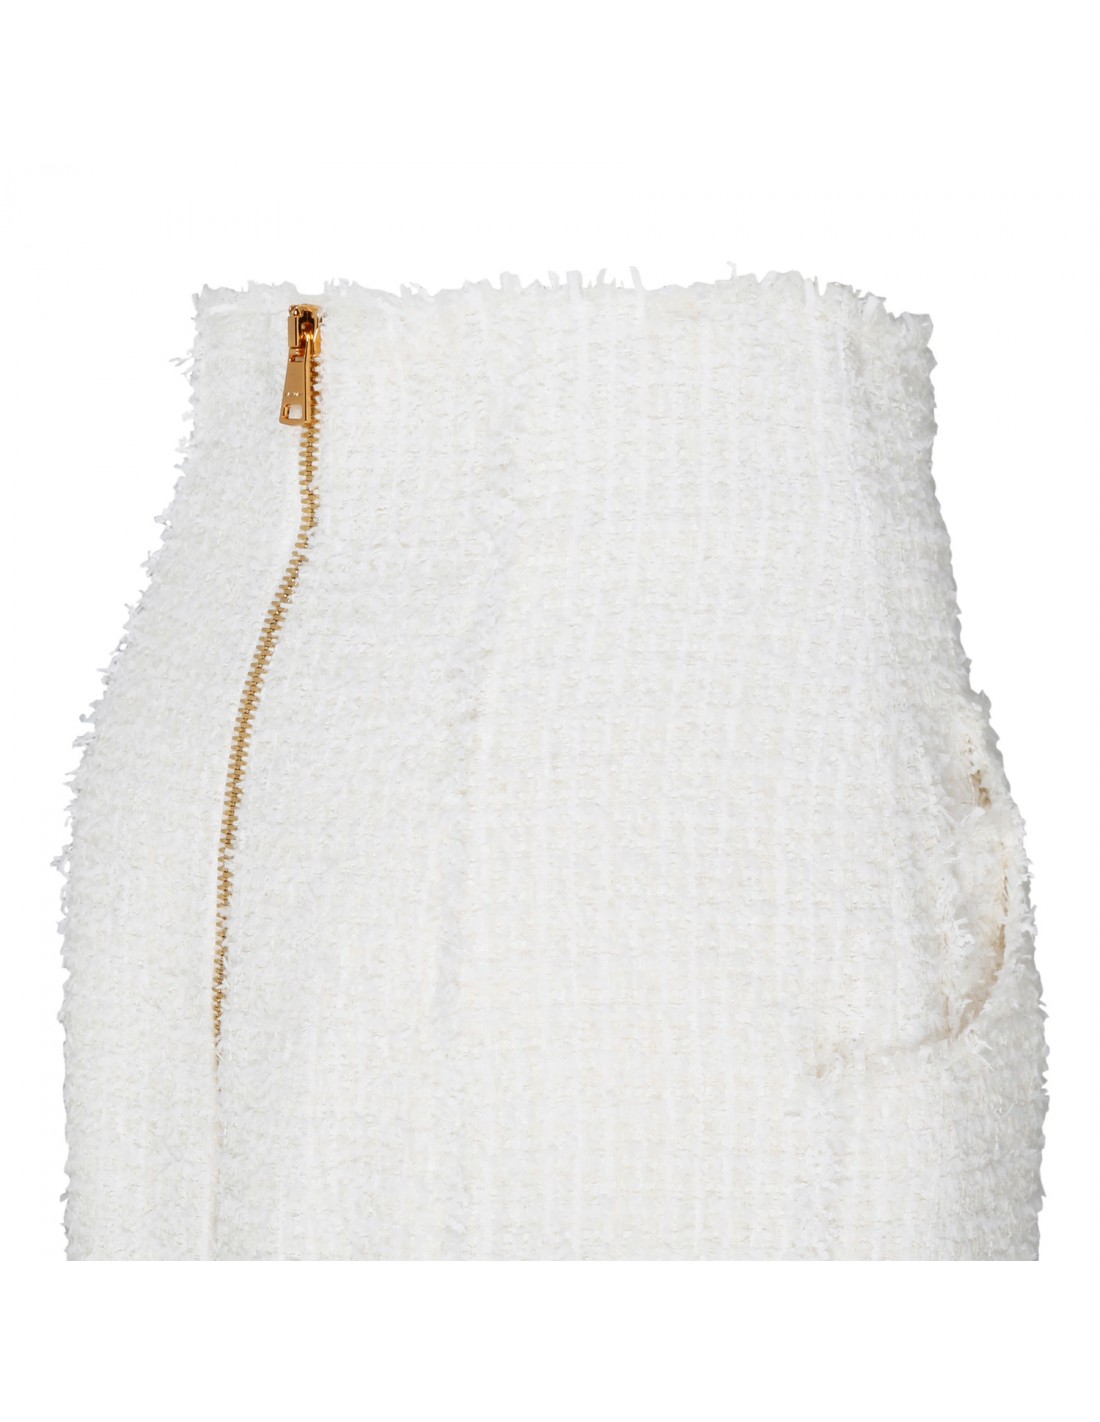 White tweed pencil skirt